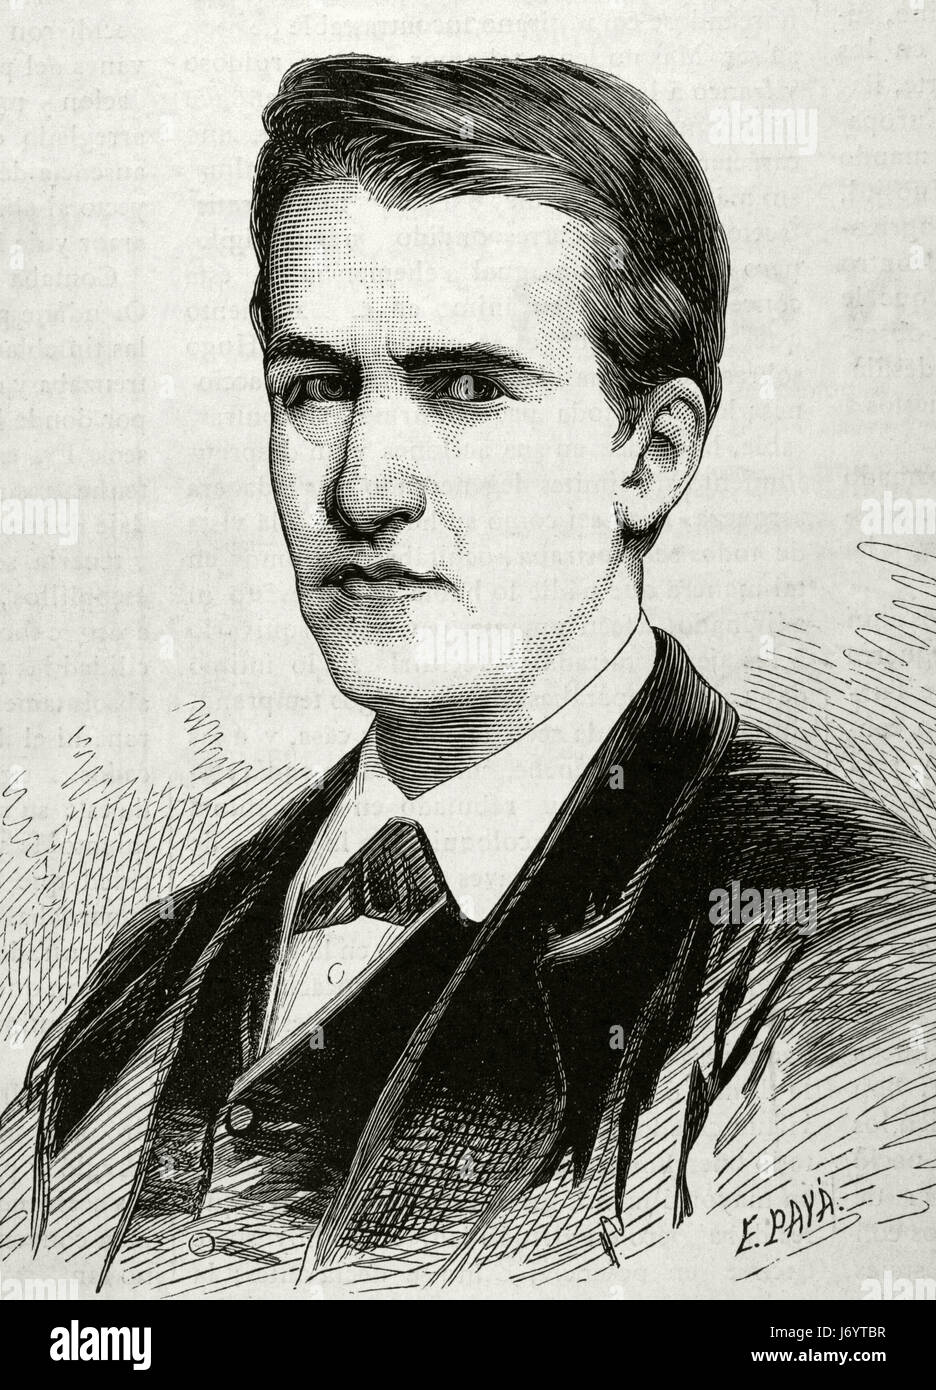 Thomas Alva Edison(1847-1931). American inventor and businessman. Portrait. Engraving by E. Paya. 'La Academia', 1878. Stock Photo